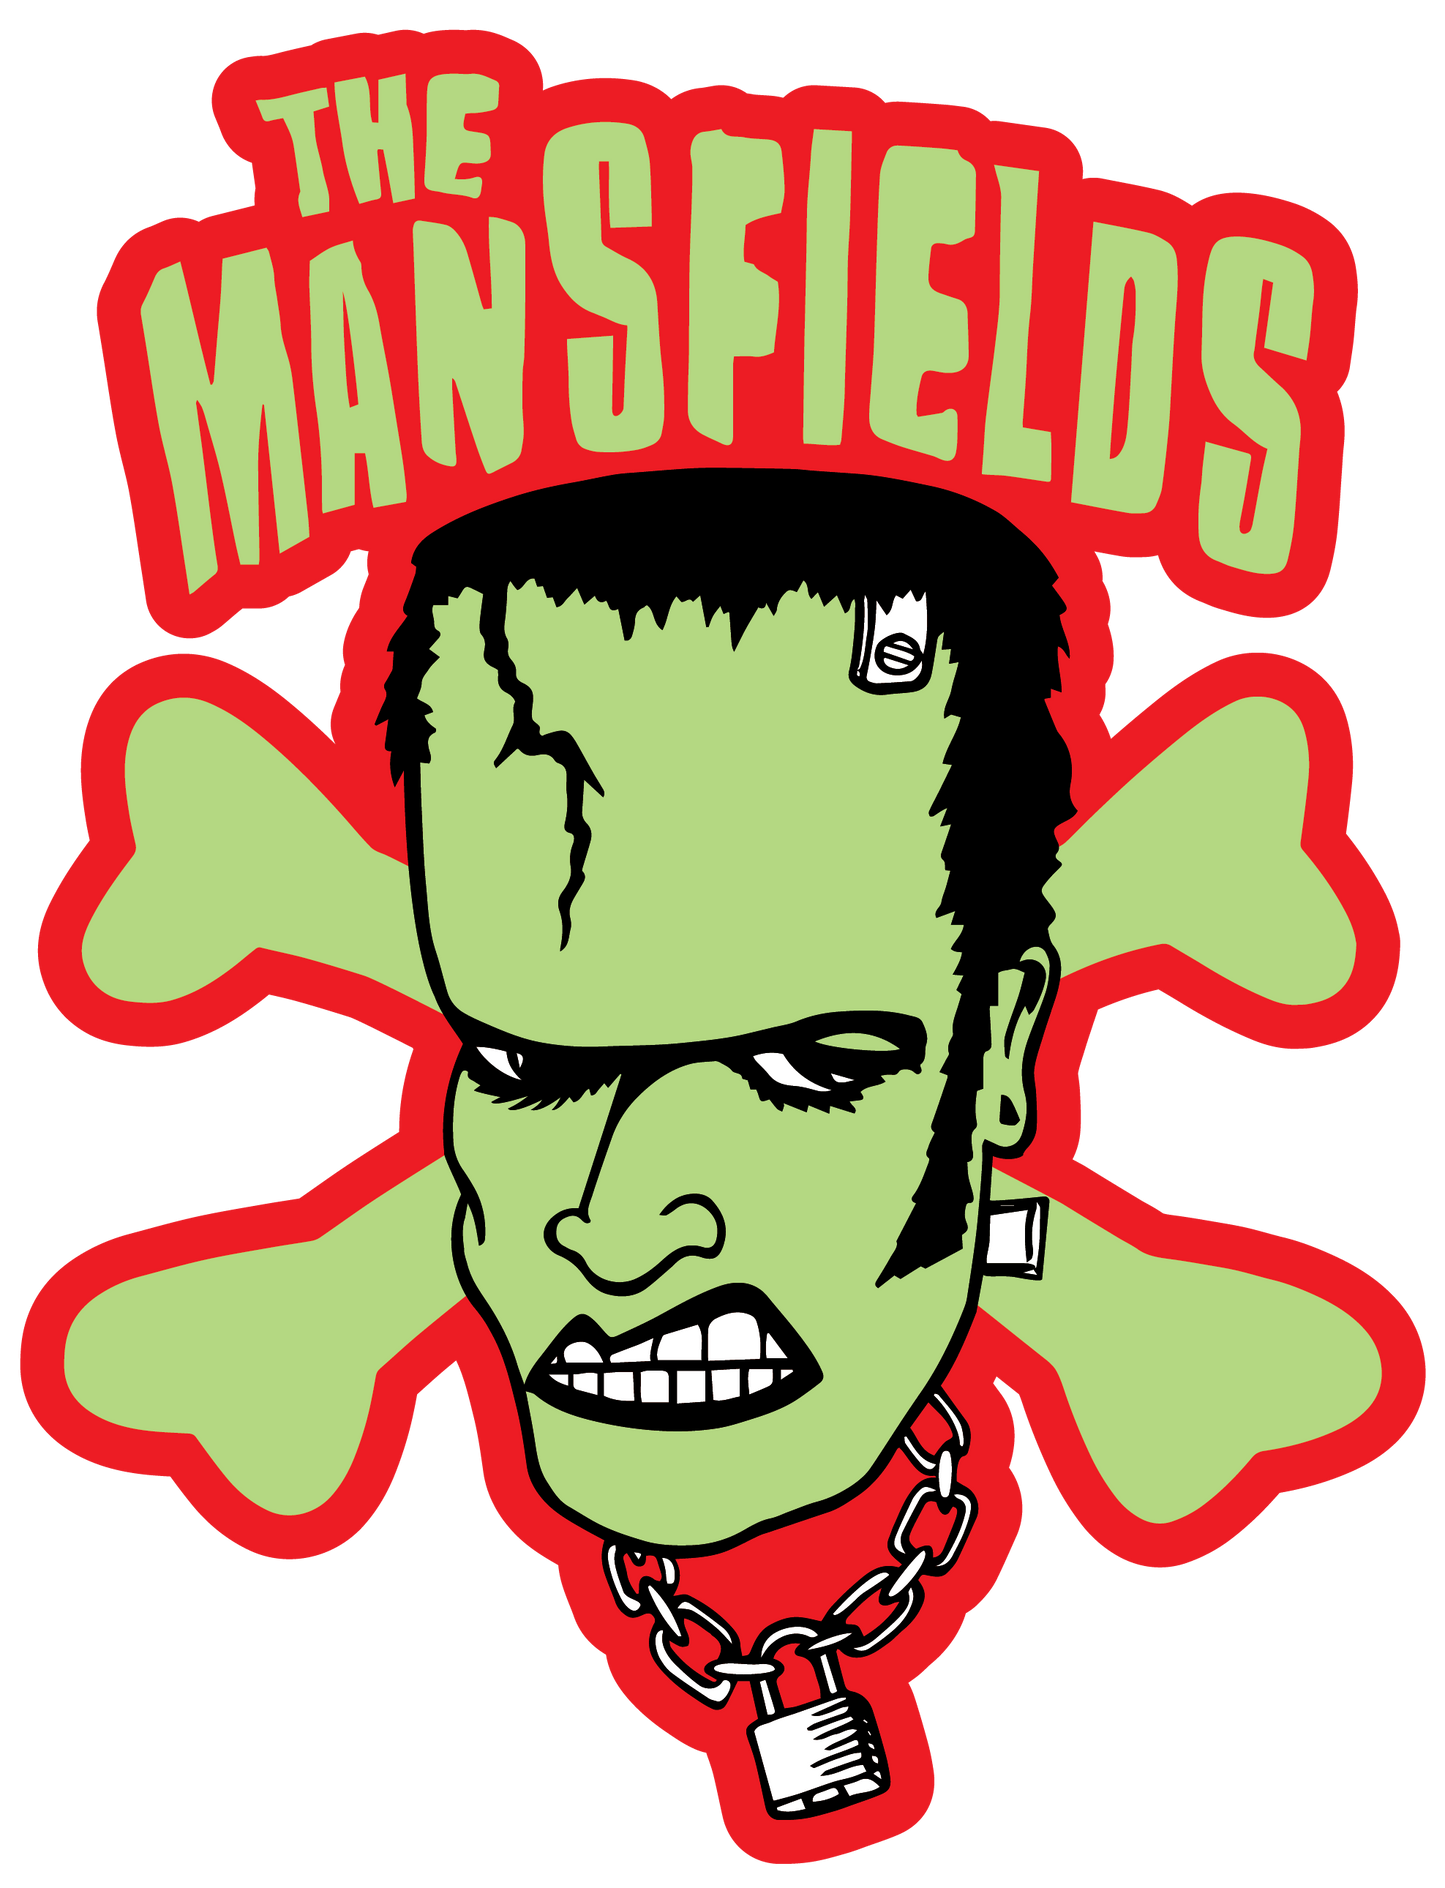 The Mansfields Frankie Logo Magnet